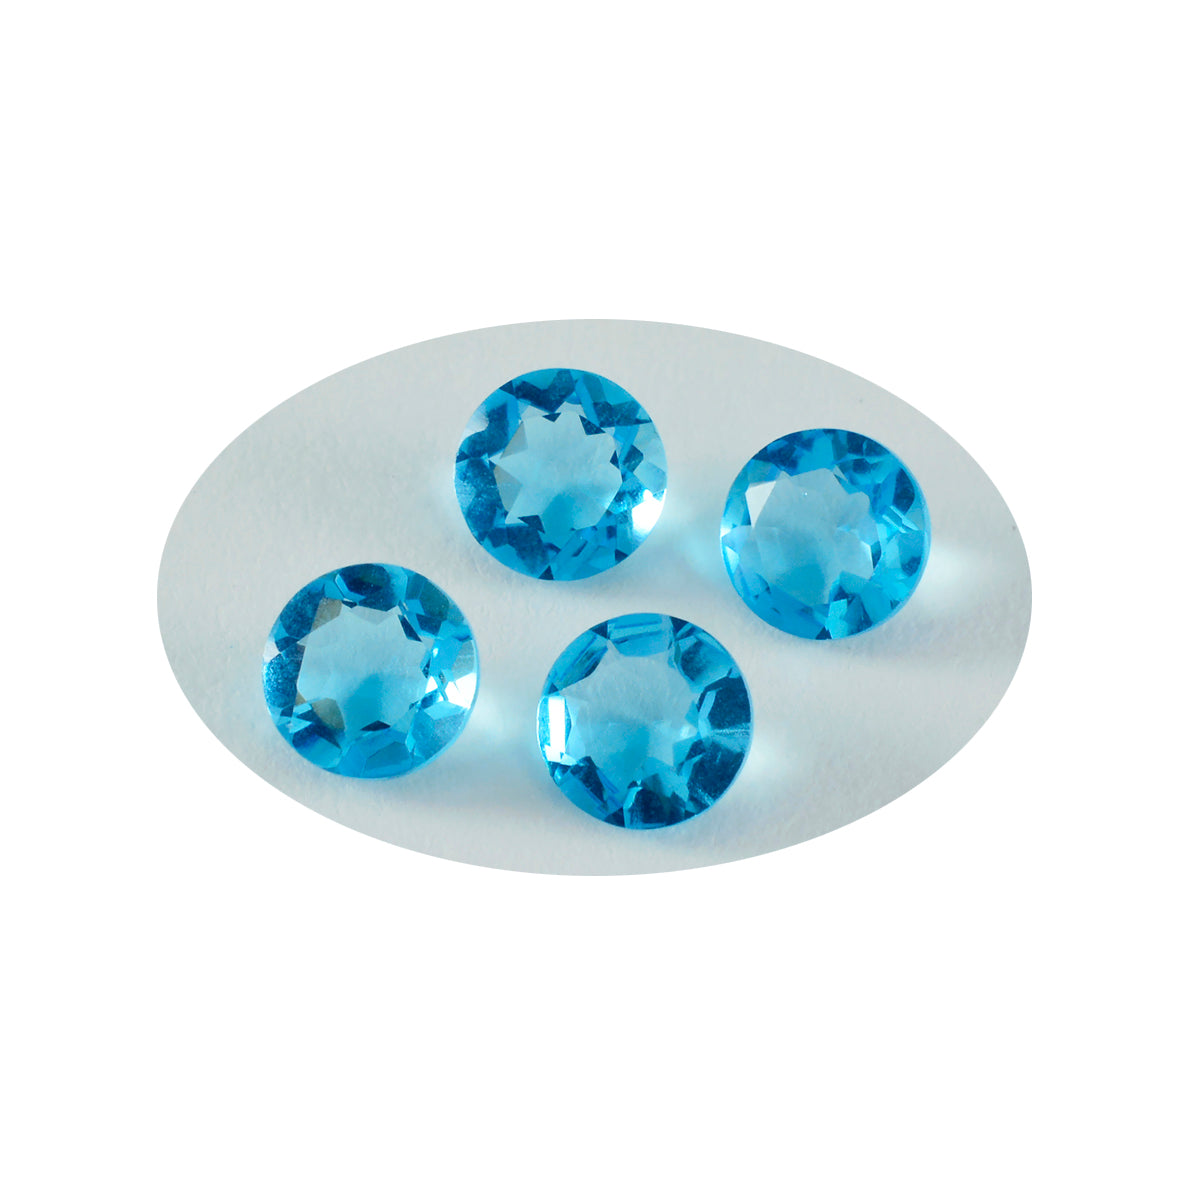 Riyogems 1PC Blue Topaz CZ Faceted 8x8 mm Round Shape cute Quality Loose Gemstone